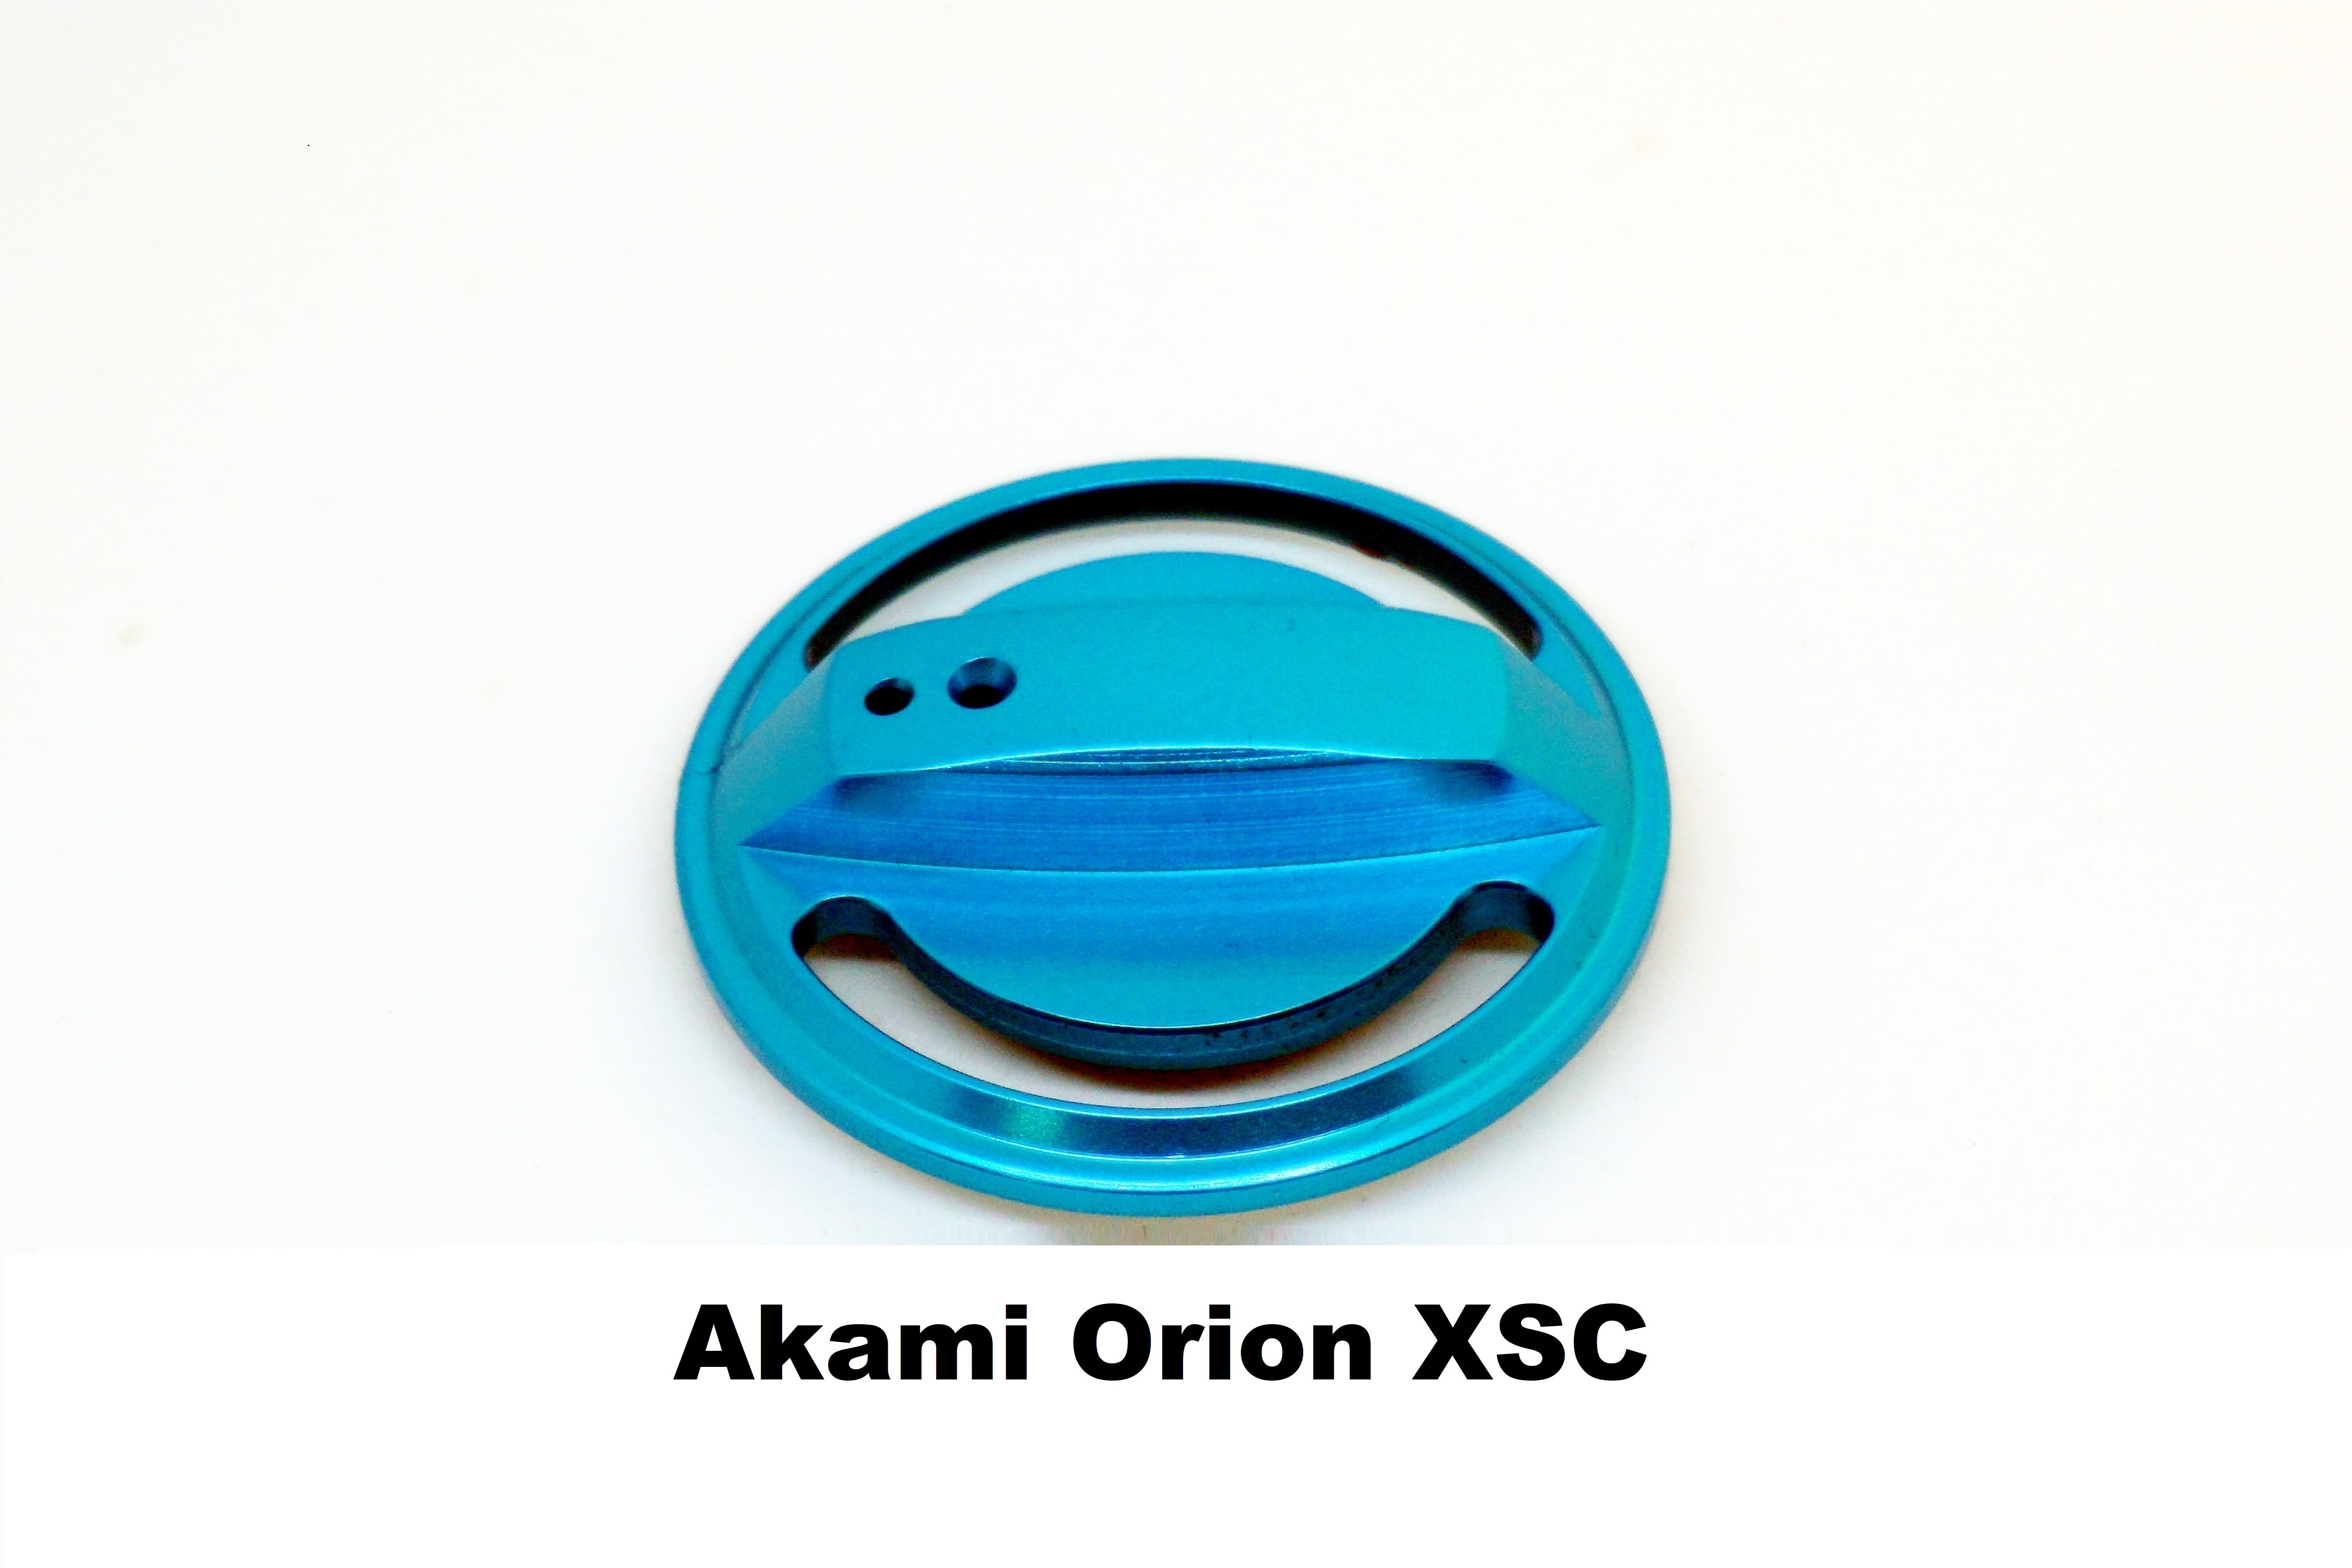 Drag Knob for Akami Orion XSC